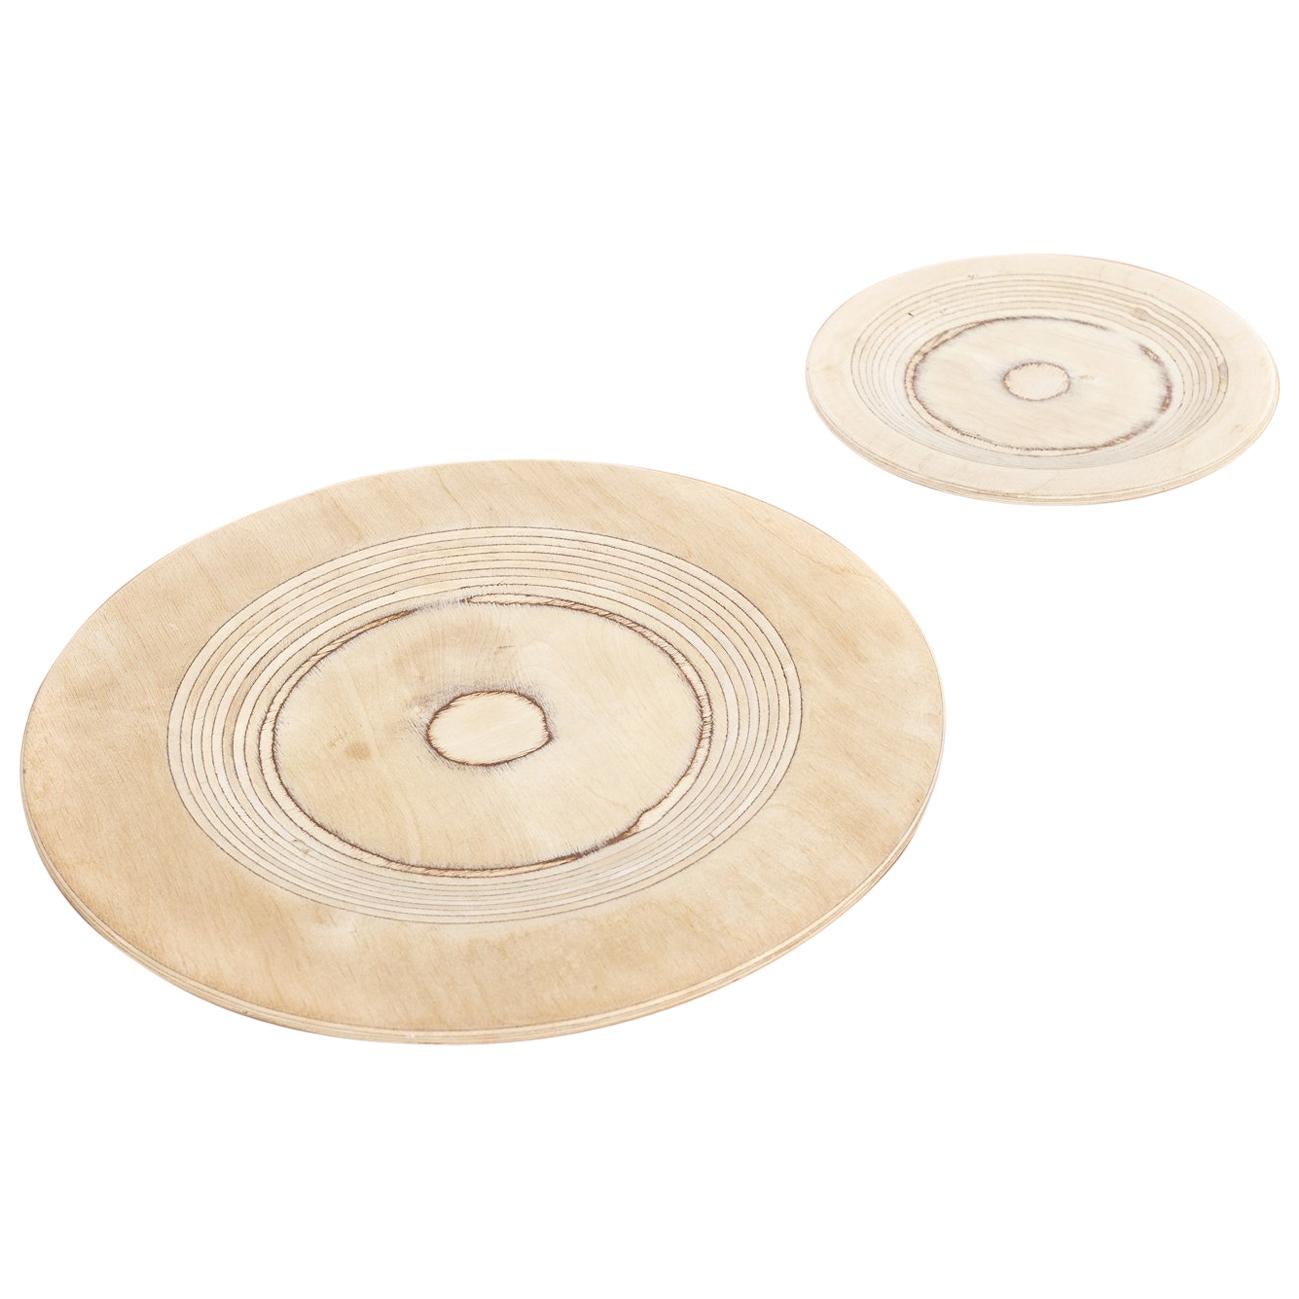 Midcentury Finnish Modern Wooden Plates by Saarinen for Keuruu